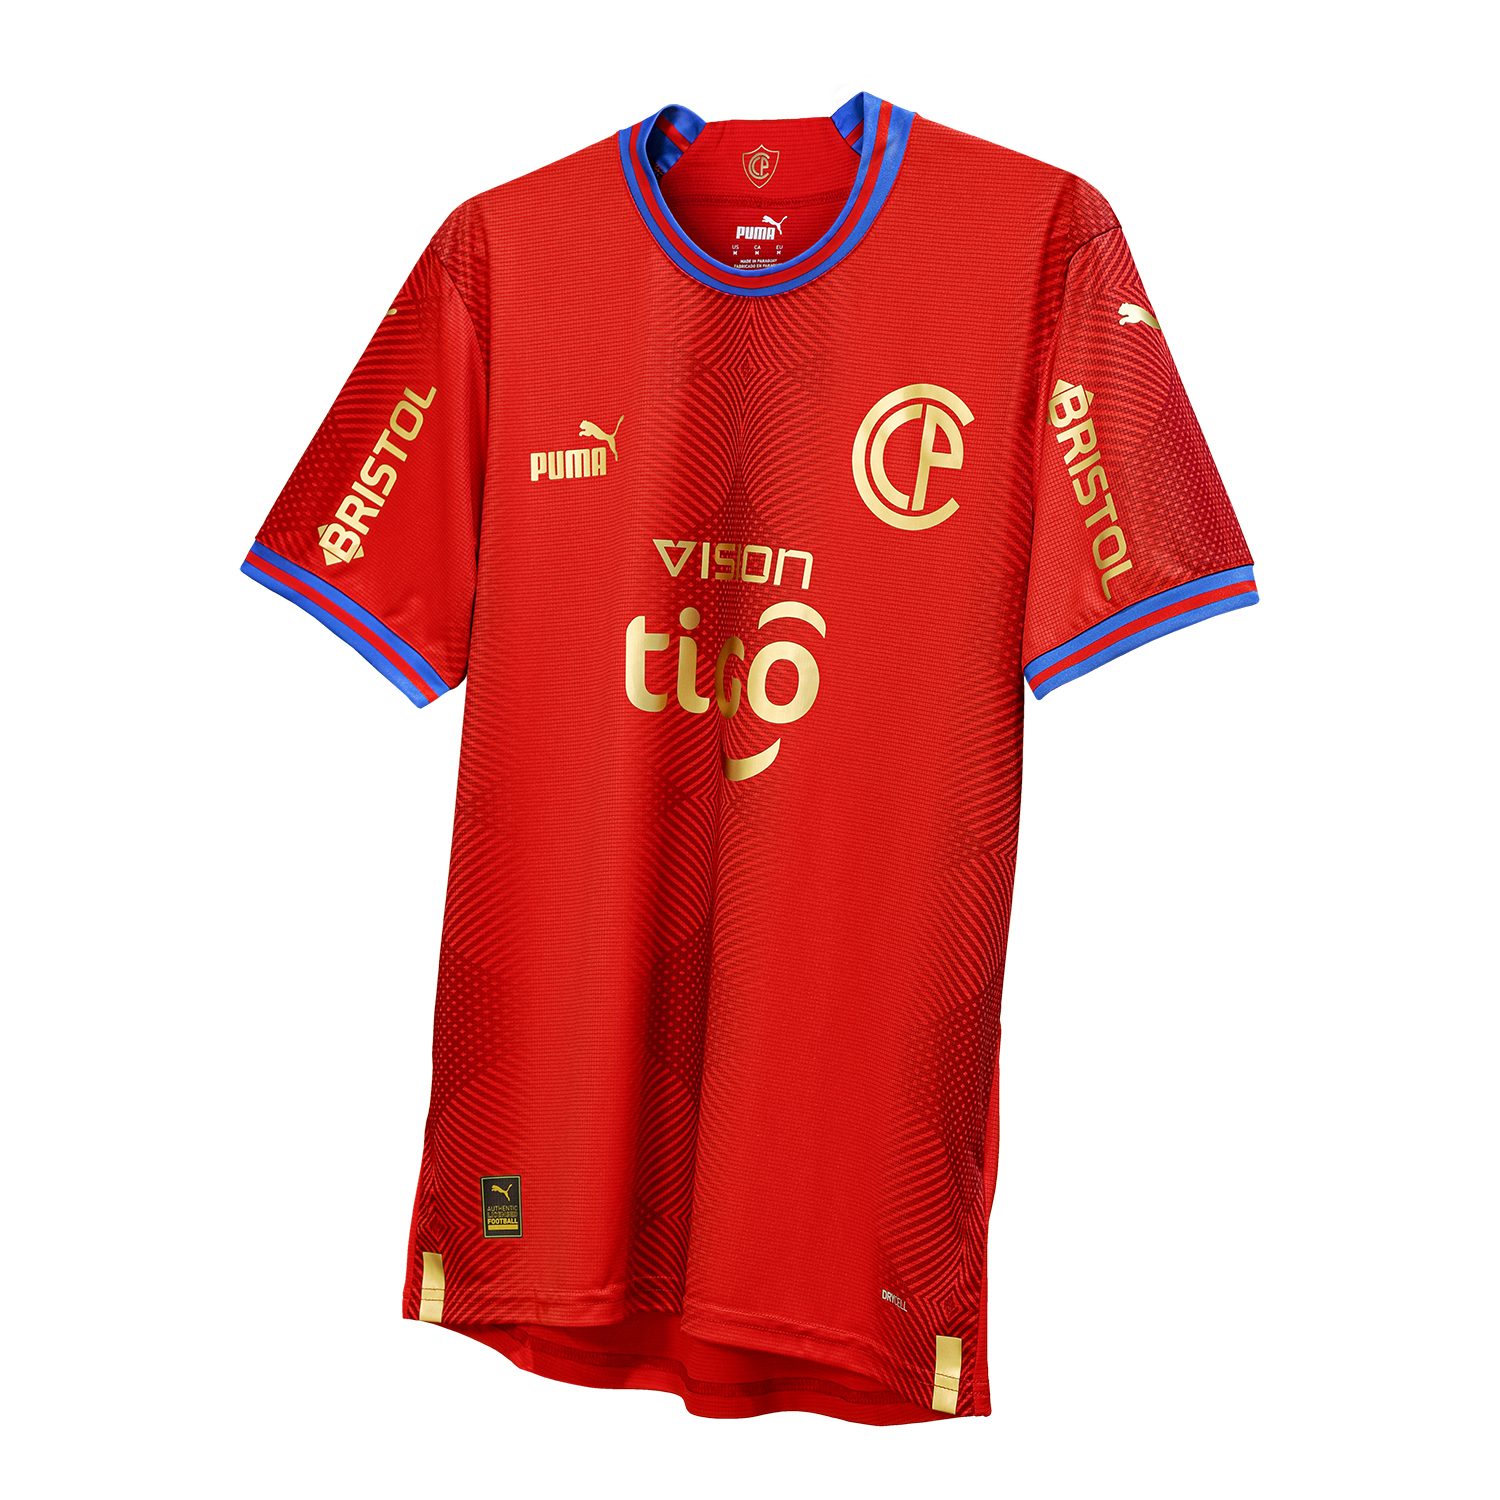 Playera c.c.p. - camiseta roja letras